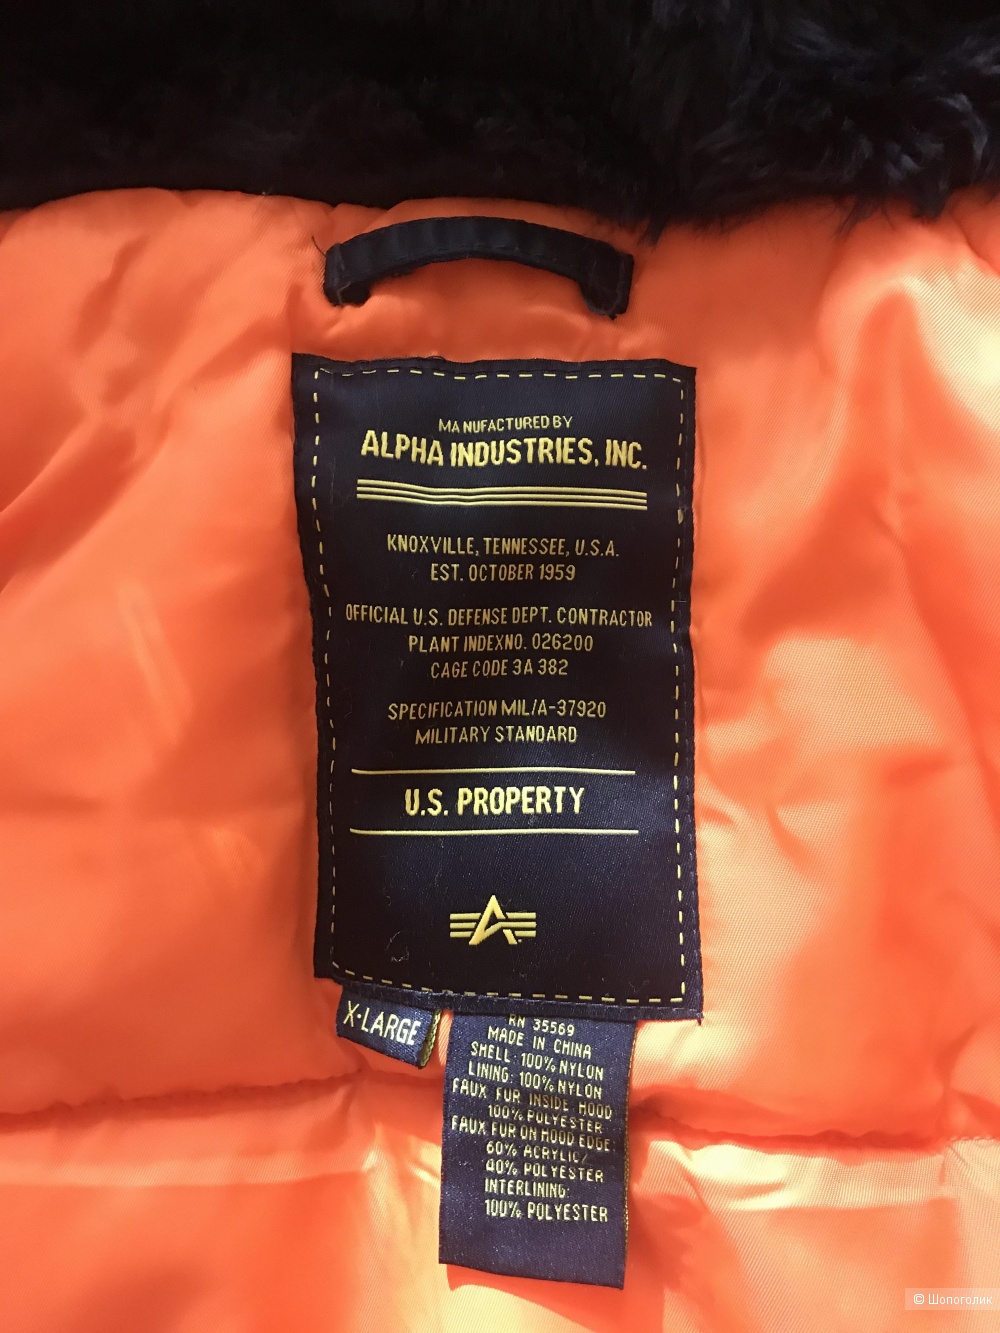 Куртка Аляска,USA,XL